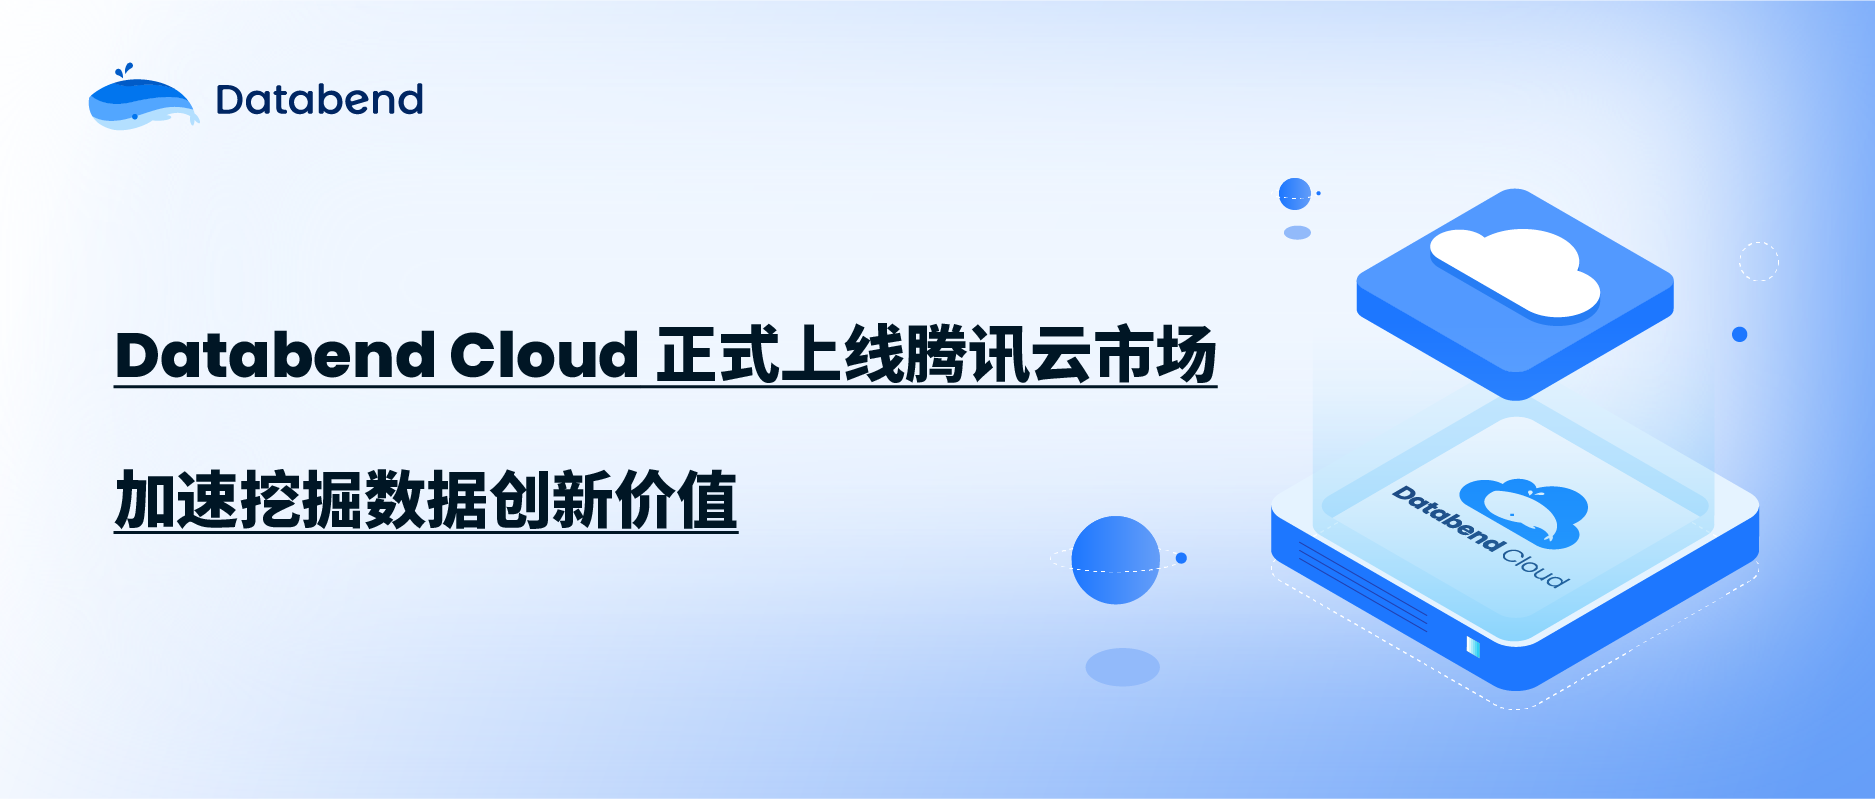 Databend Cloud 正式上线腾讯云市场，加速挖掘数据创新价值